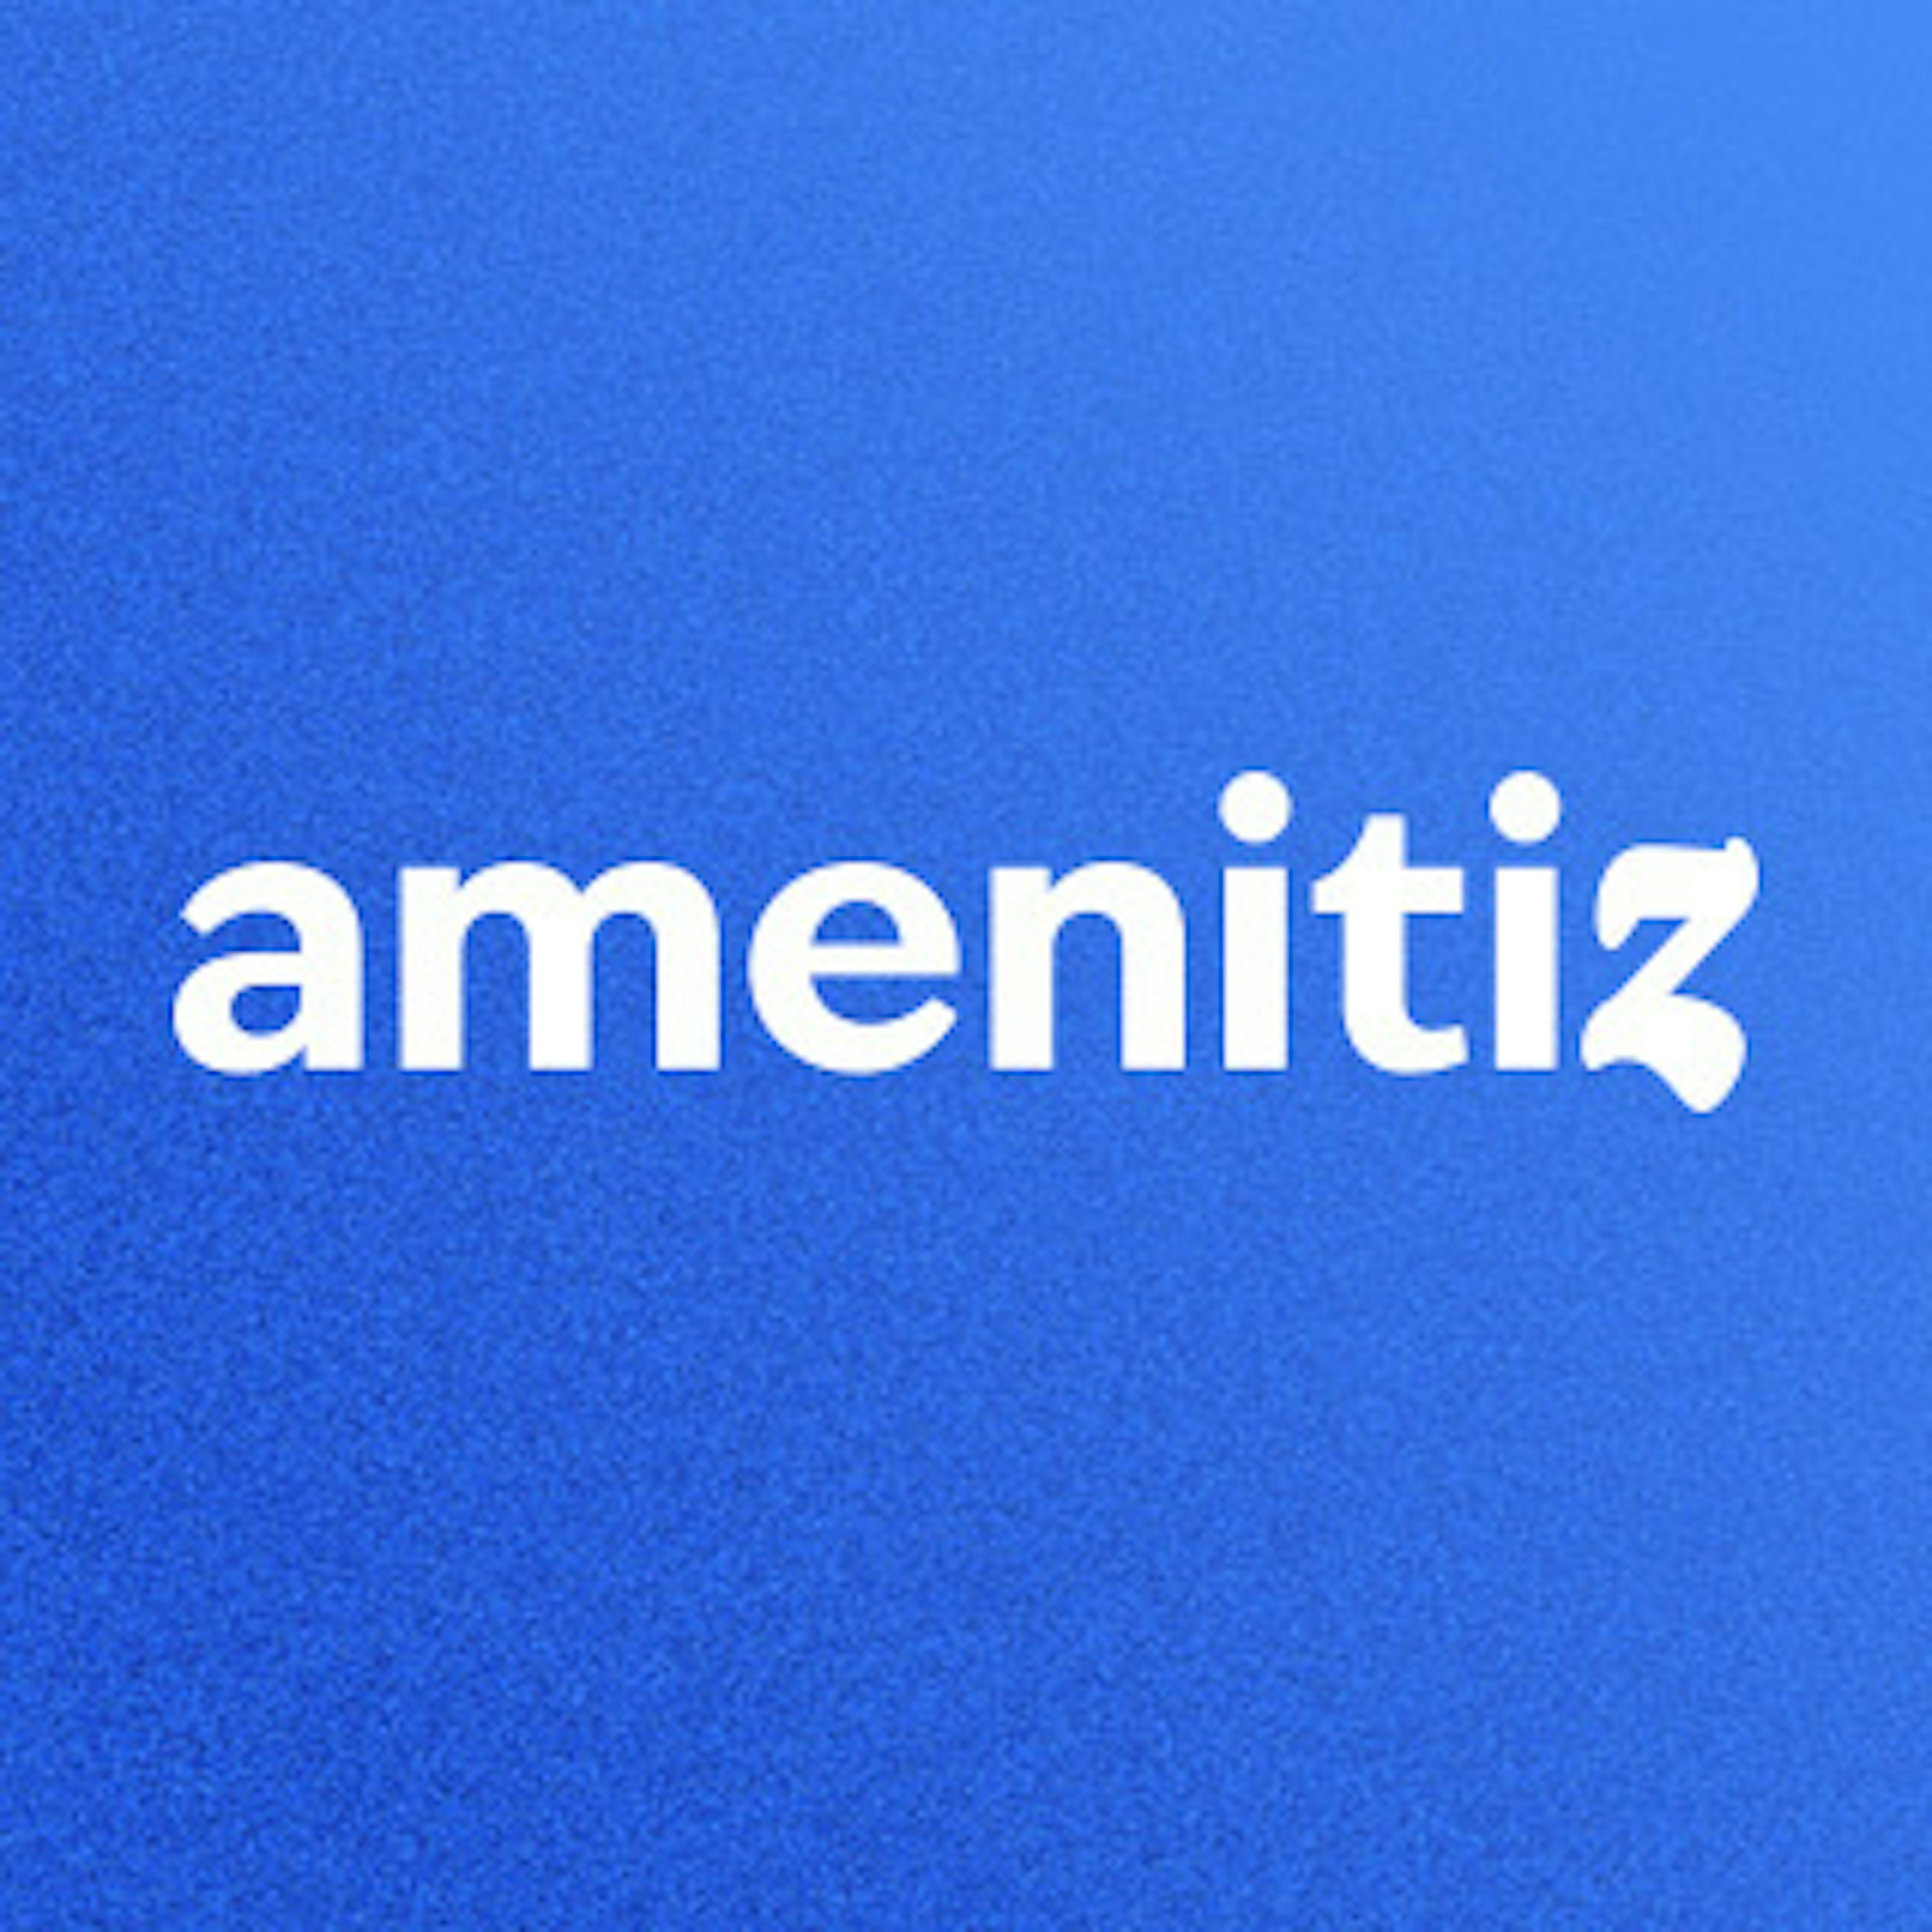 Amenitiz Logo